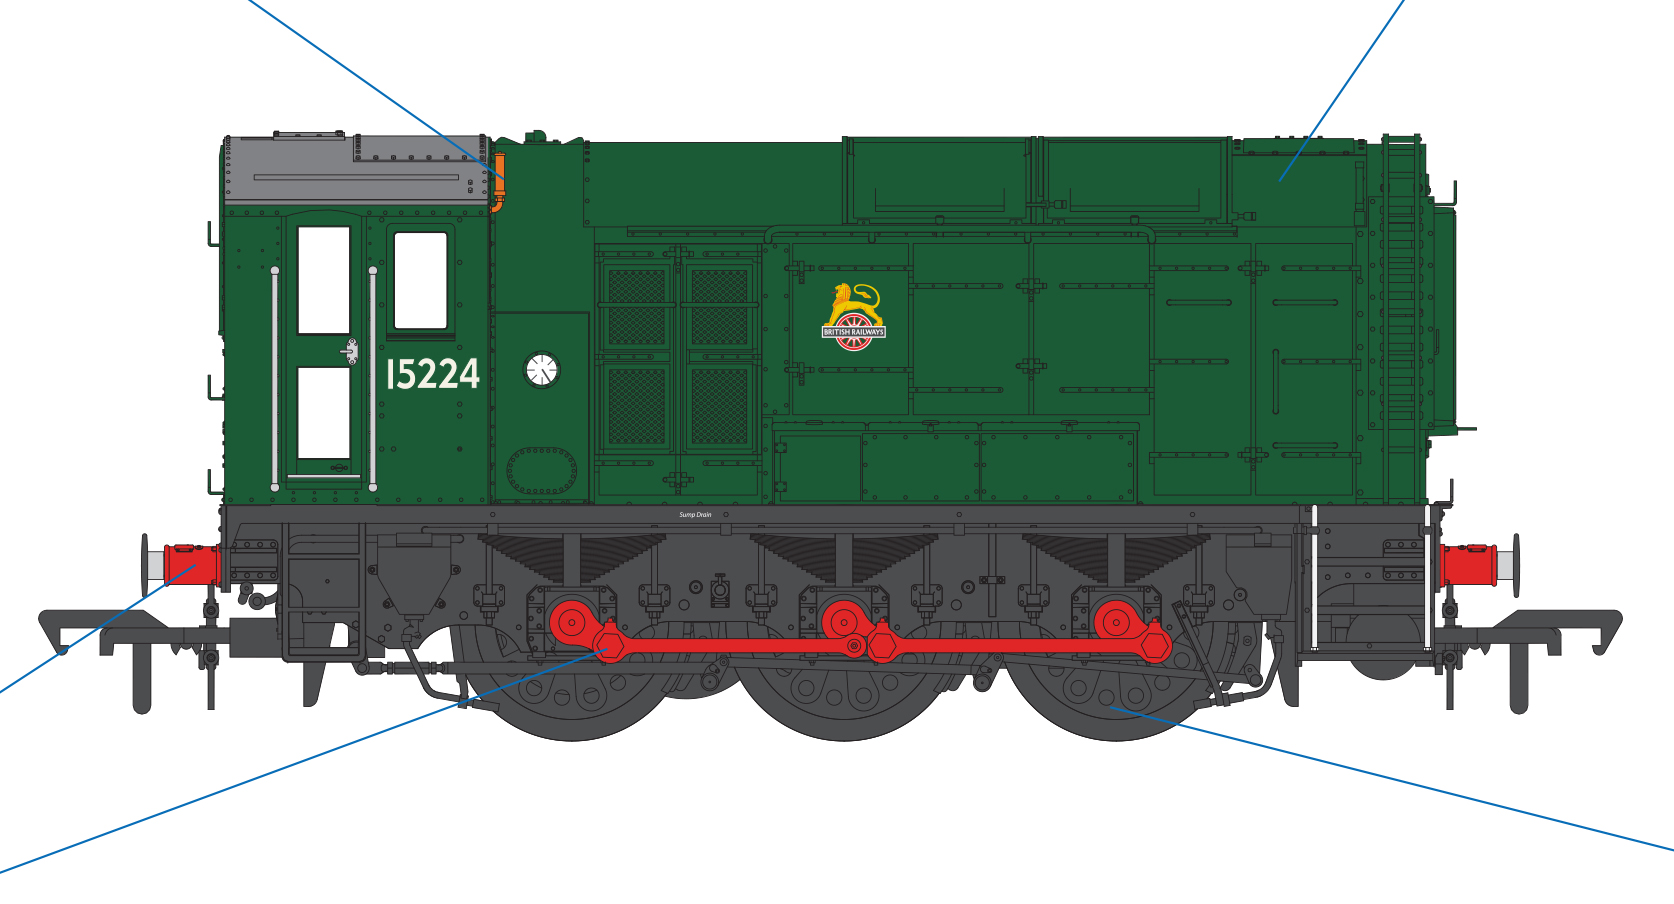 MR-521 Model Rail Class 12 15224 Image